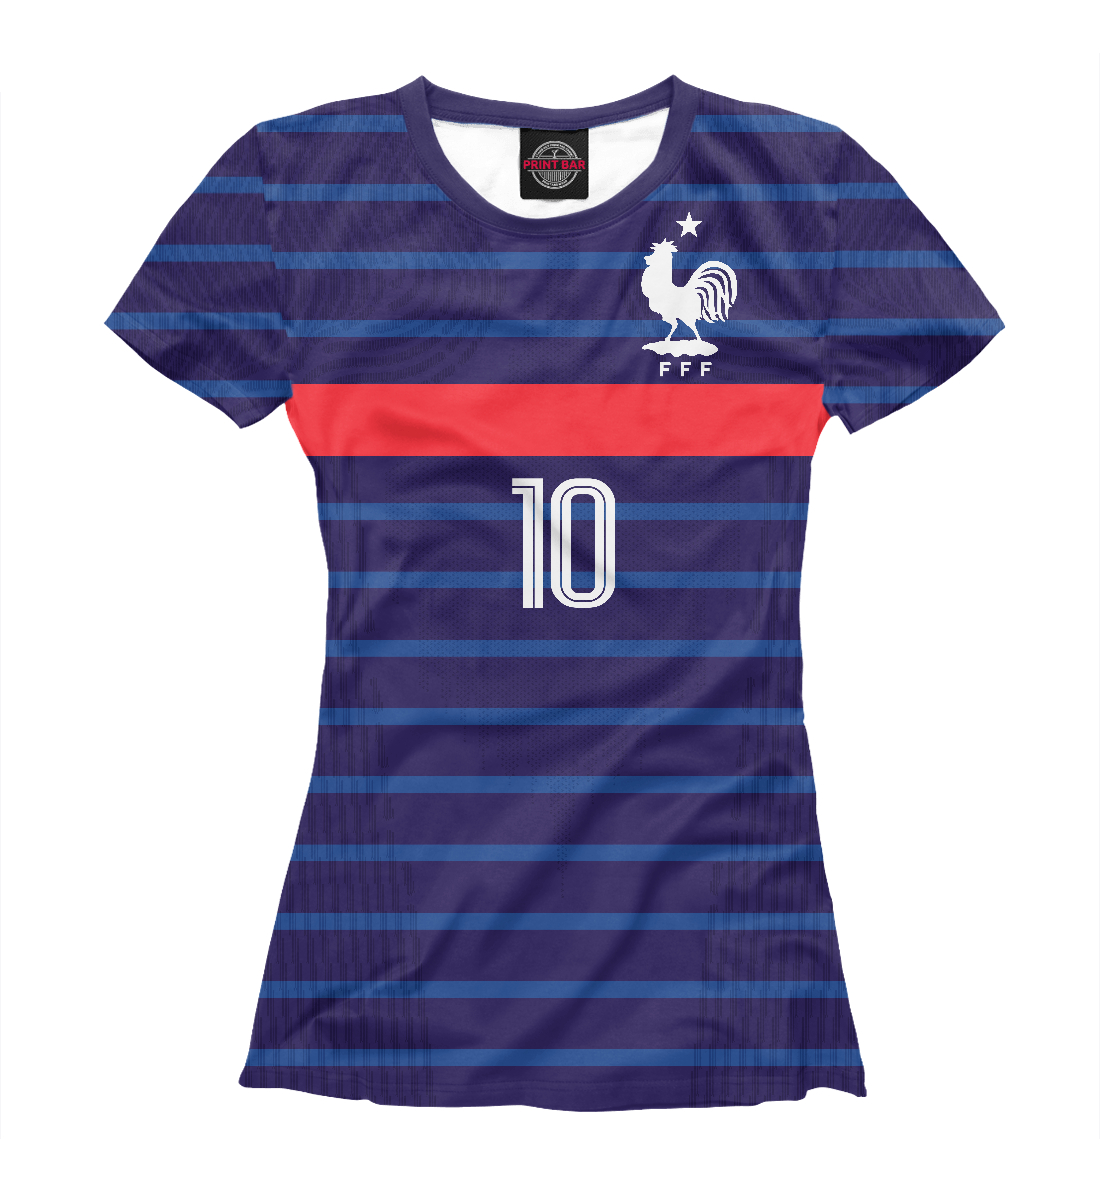 Футболка Сборная Франции Мбаппе для девочек, артикул: SFC-419702-fut-1mp